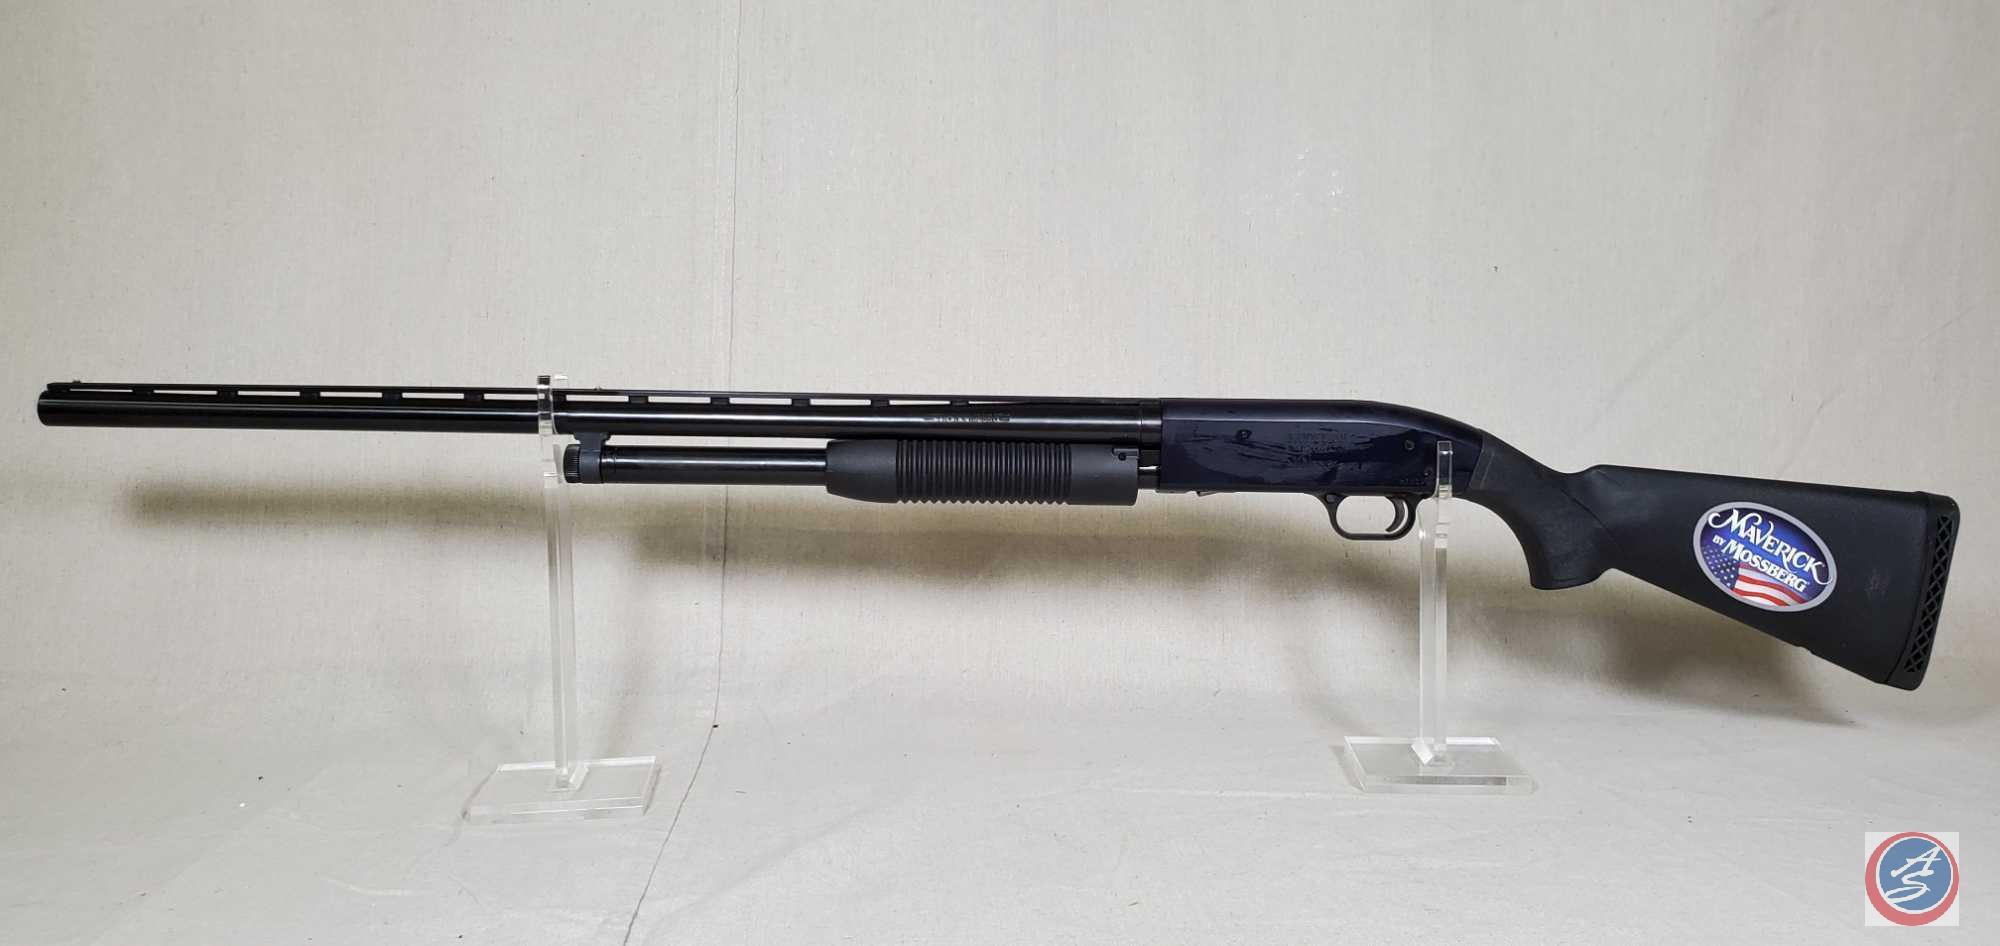 Maverick Model 88 12 GA Shotgun Field Grade Mossberg Pump Shotgun with 28 inch barrel. New in Box.